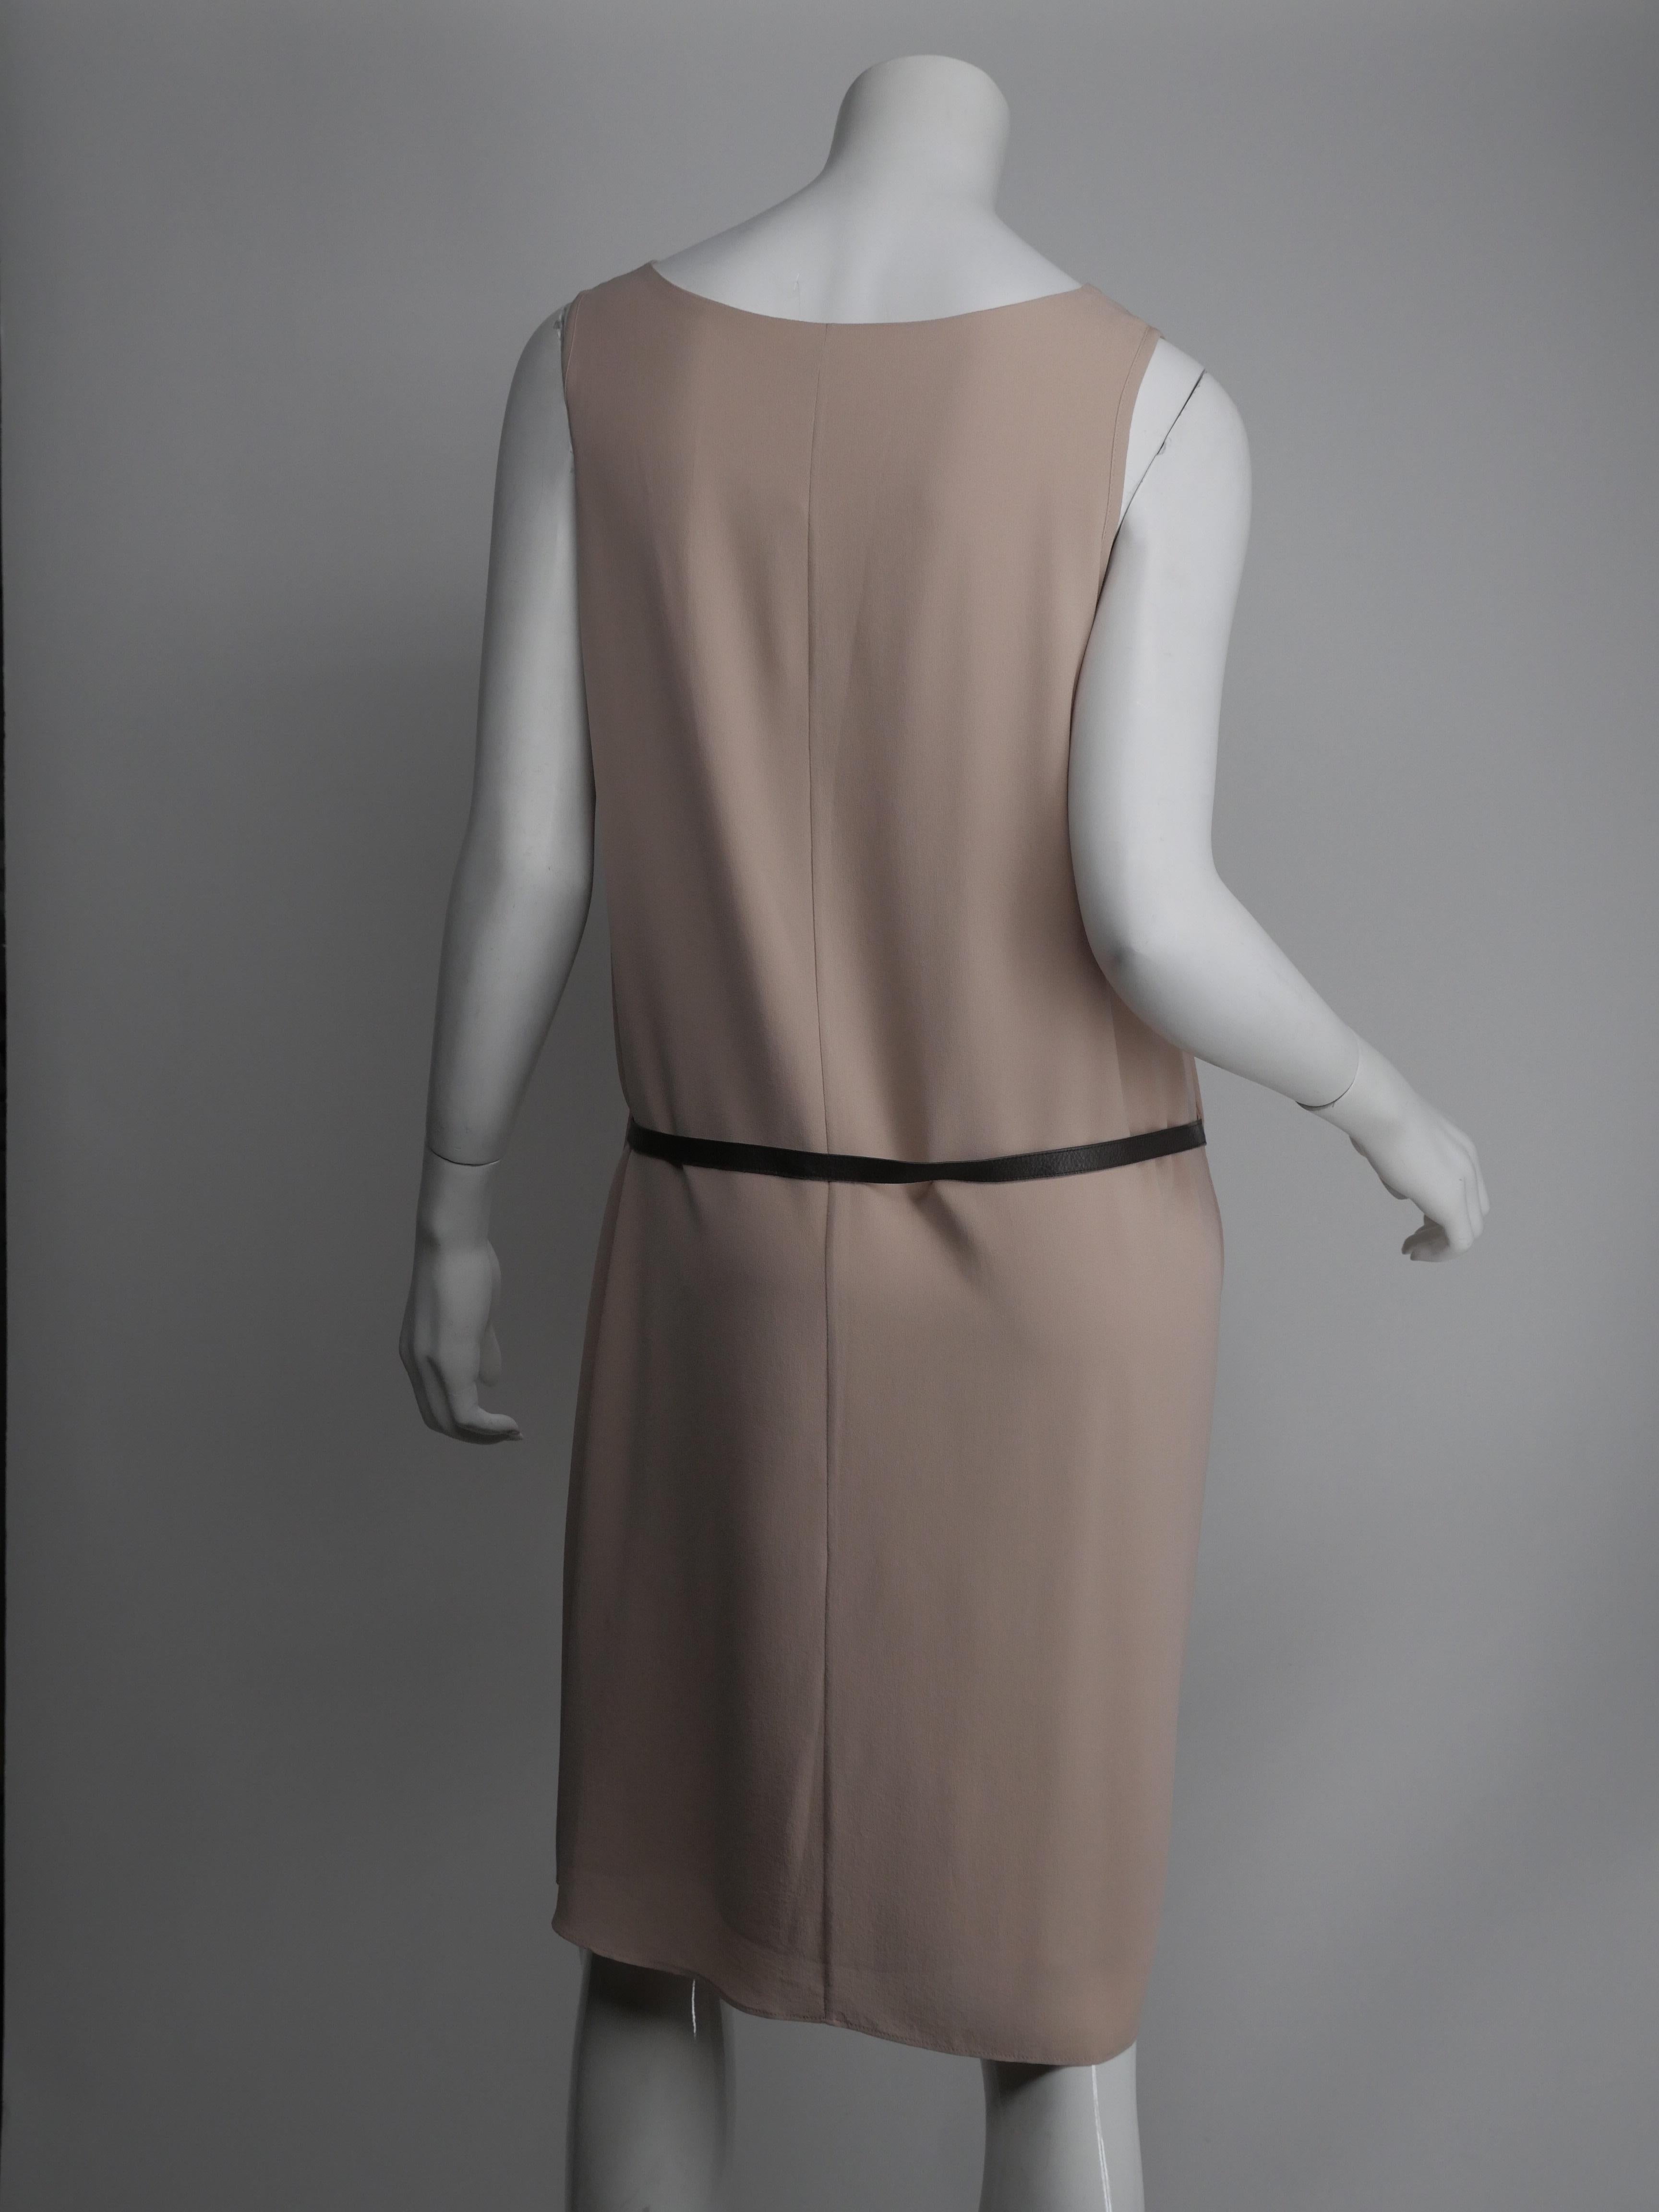 Brunello Cucinelli Size Large Beige Silk Sleeveless Dress 3